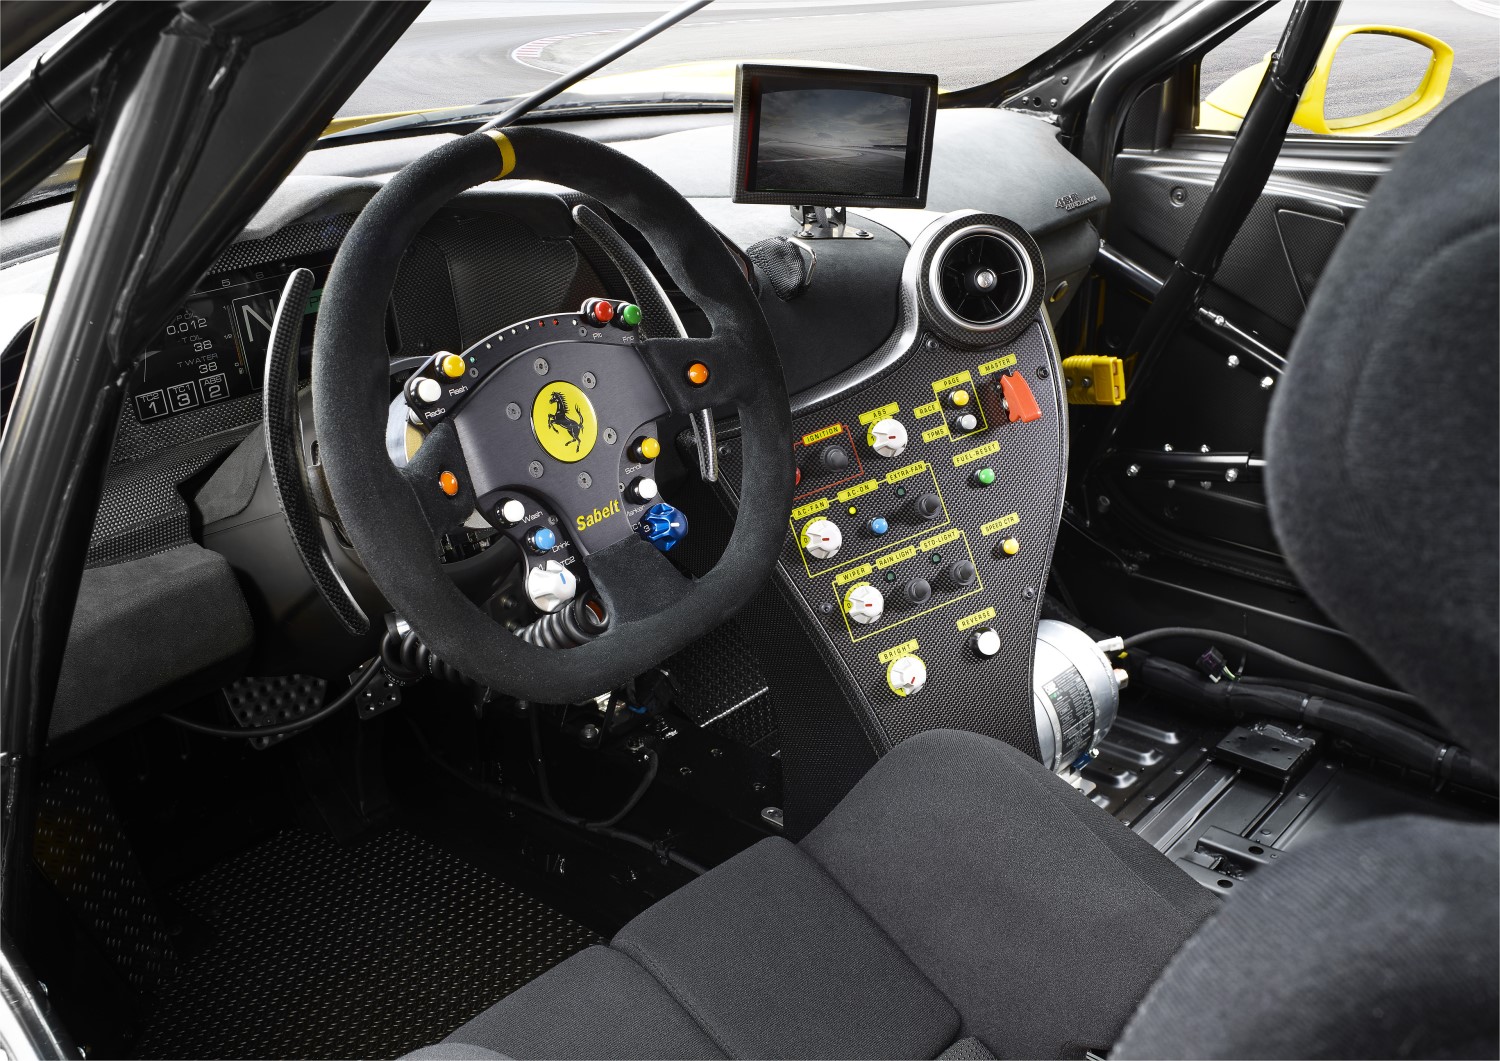 Cockpit - race ready